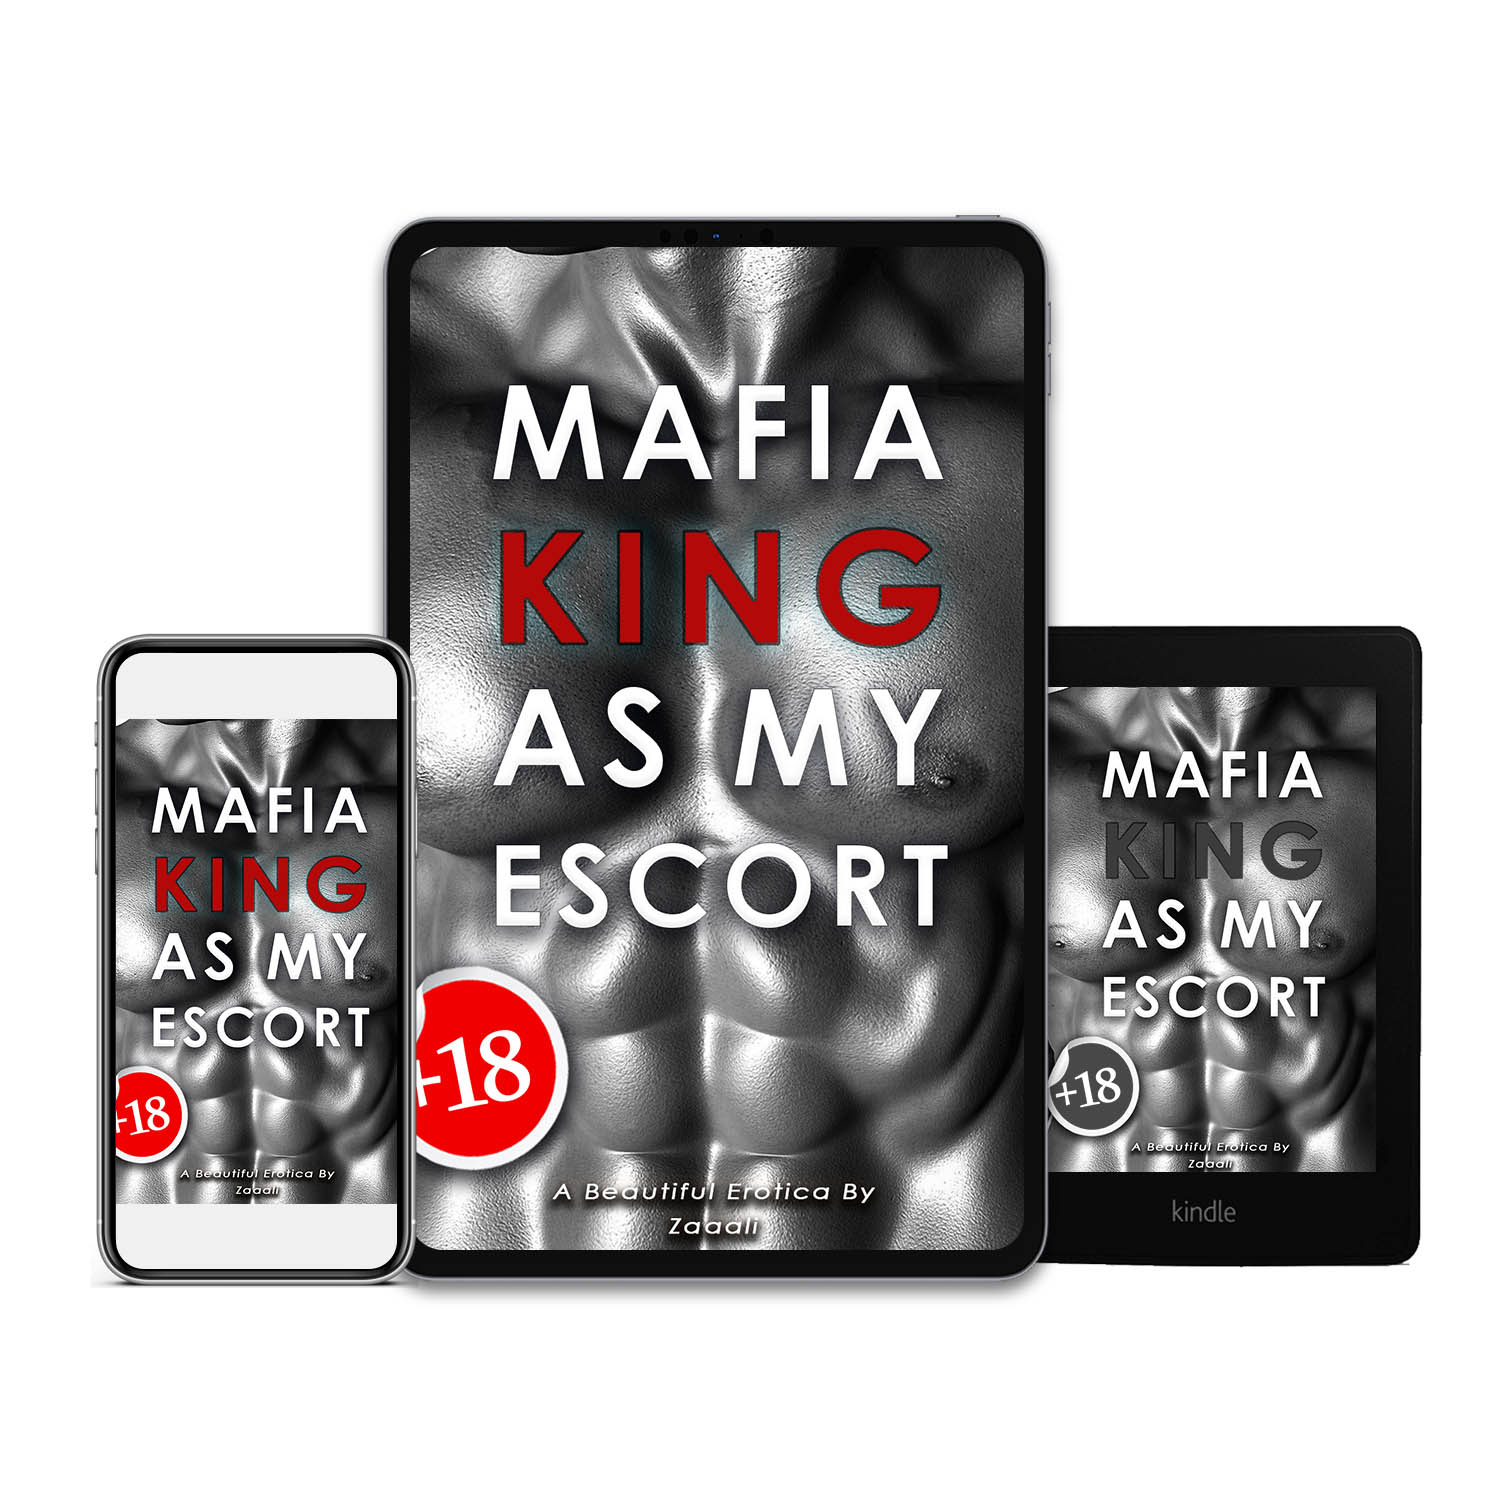 bookconsilio-portfolio-mafia-king-as-my-escort-ebookcoverdesign-